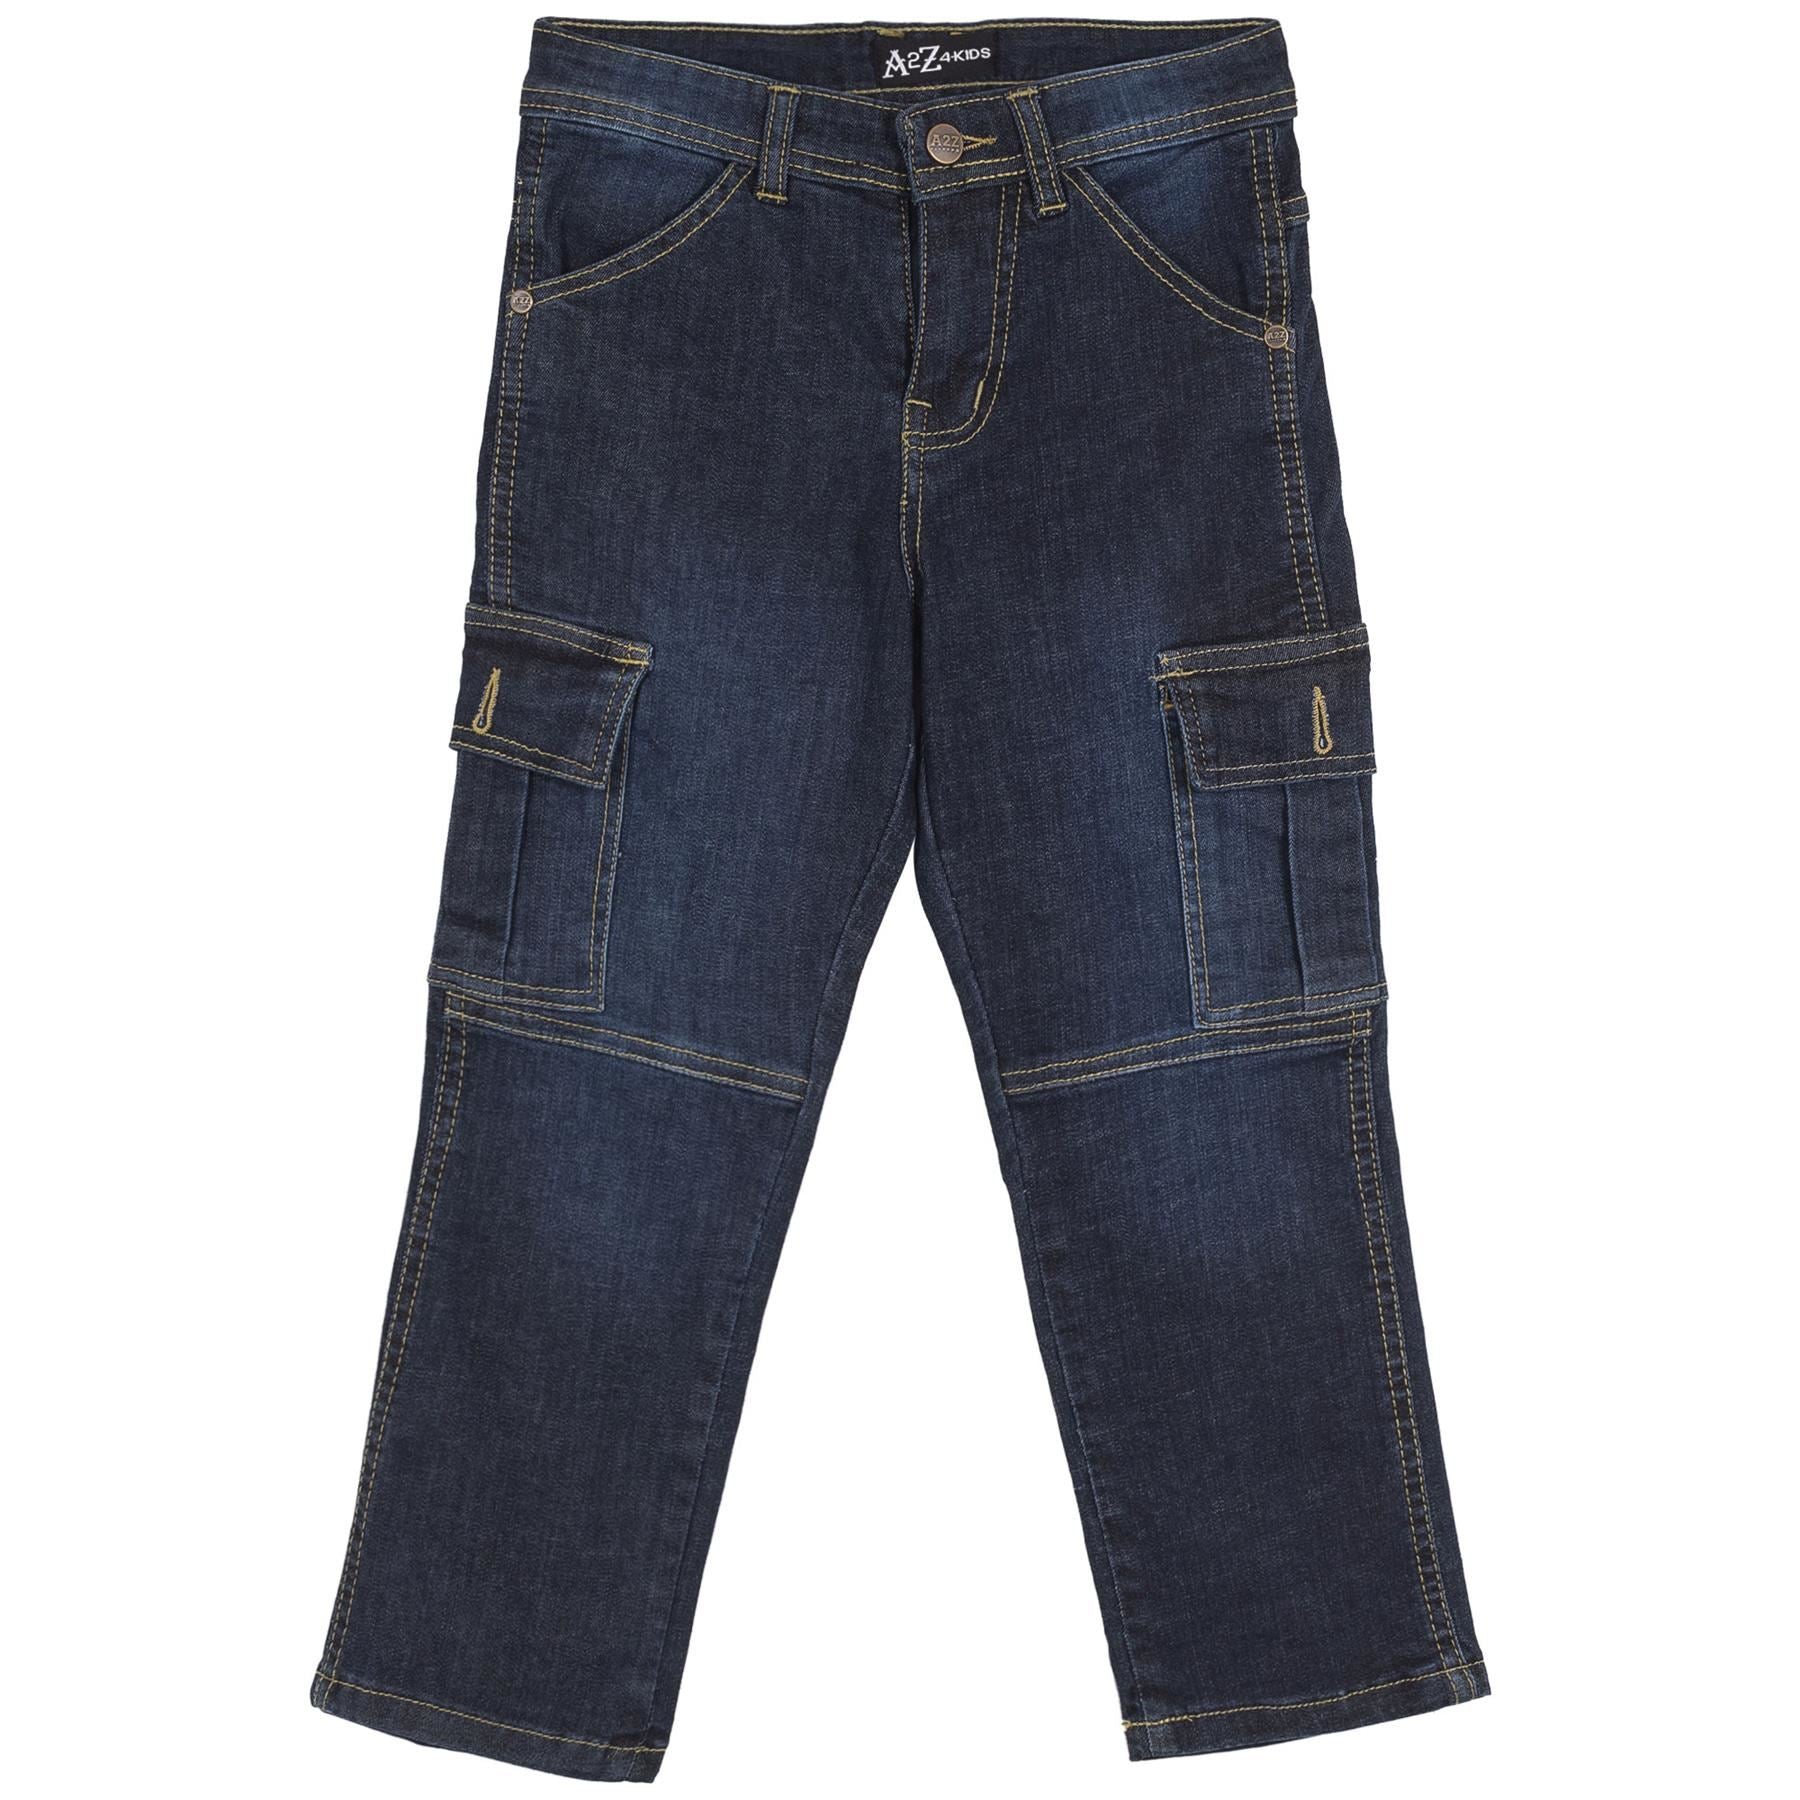 Kids Boys Cargo Denim Pant Dark Blue 6 Pocket Denim Jeans Stretchy Comfort Pant